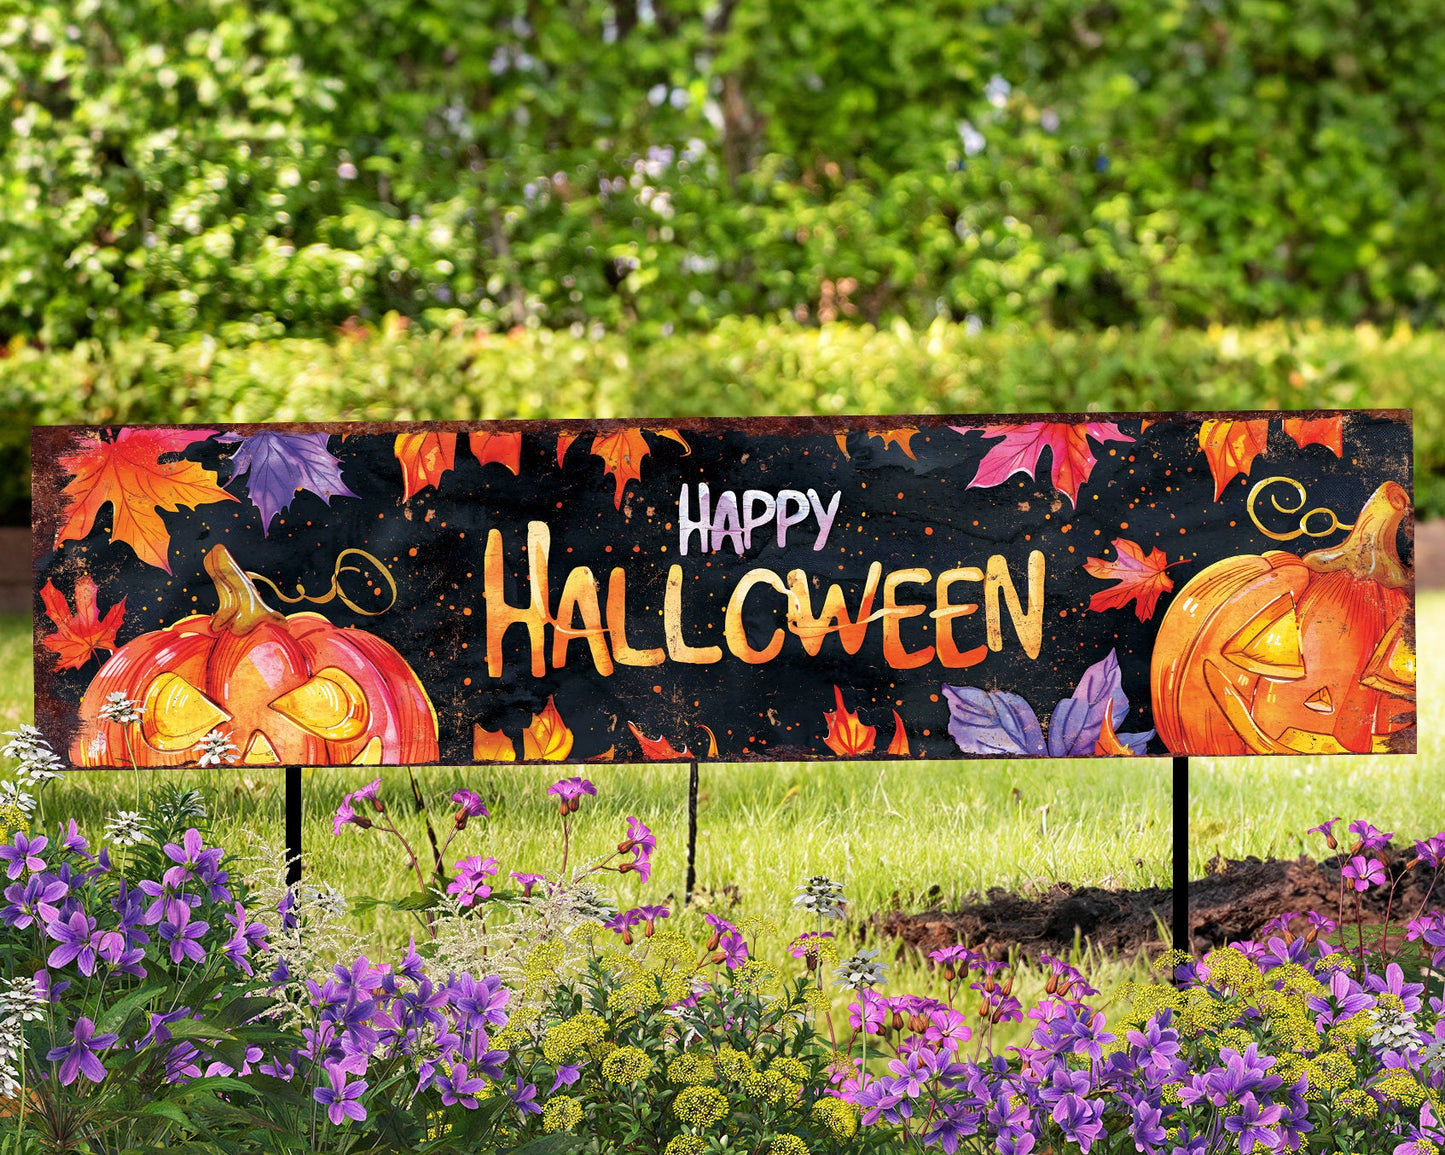 36in Happy Halloween Garden Stake - Watercolor Style Pumpkin - Perfect for Outdoor Decor, Yard Art, Halloween Garden Decorations